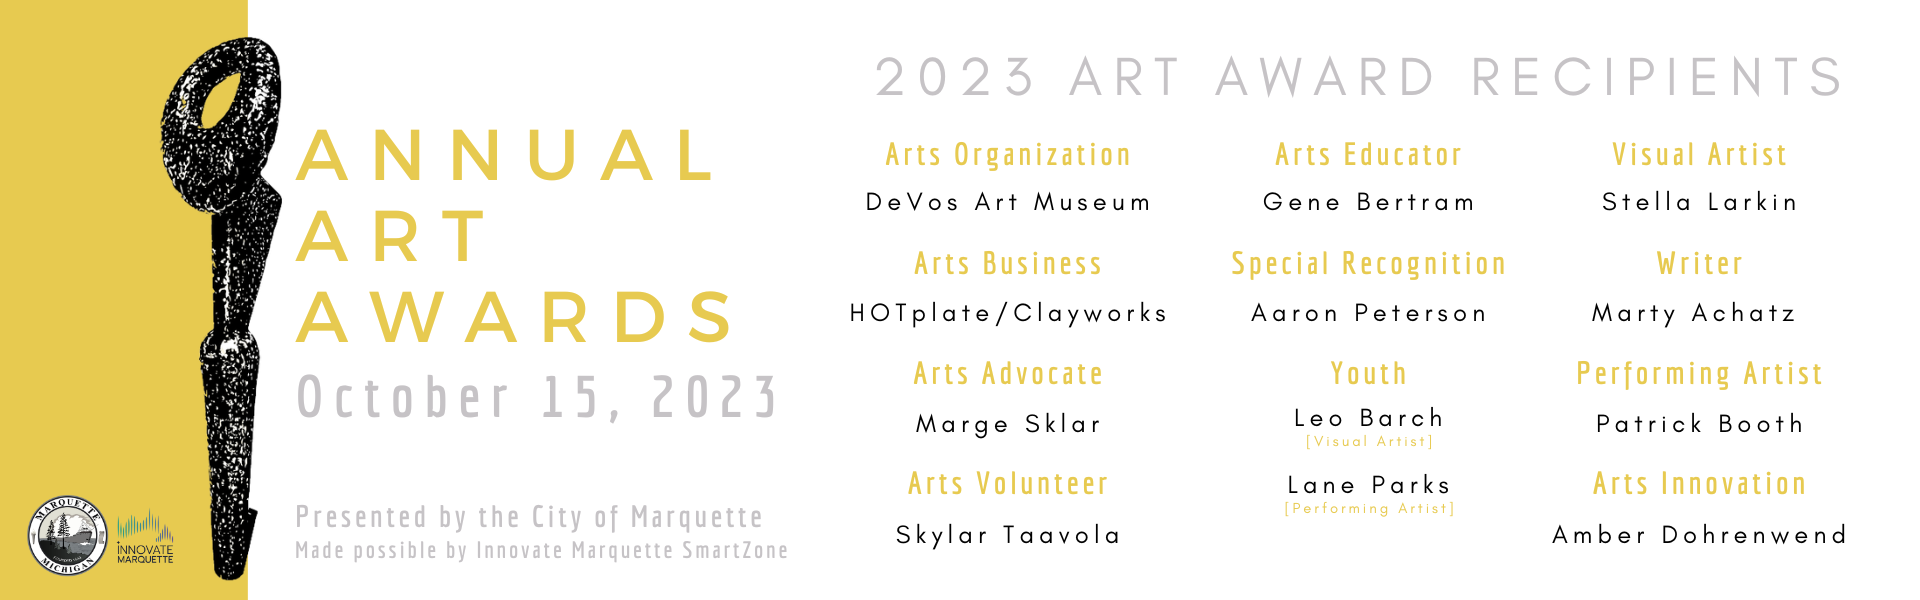 Annual Art Awards